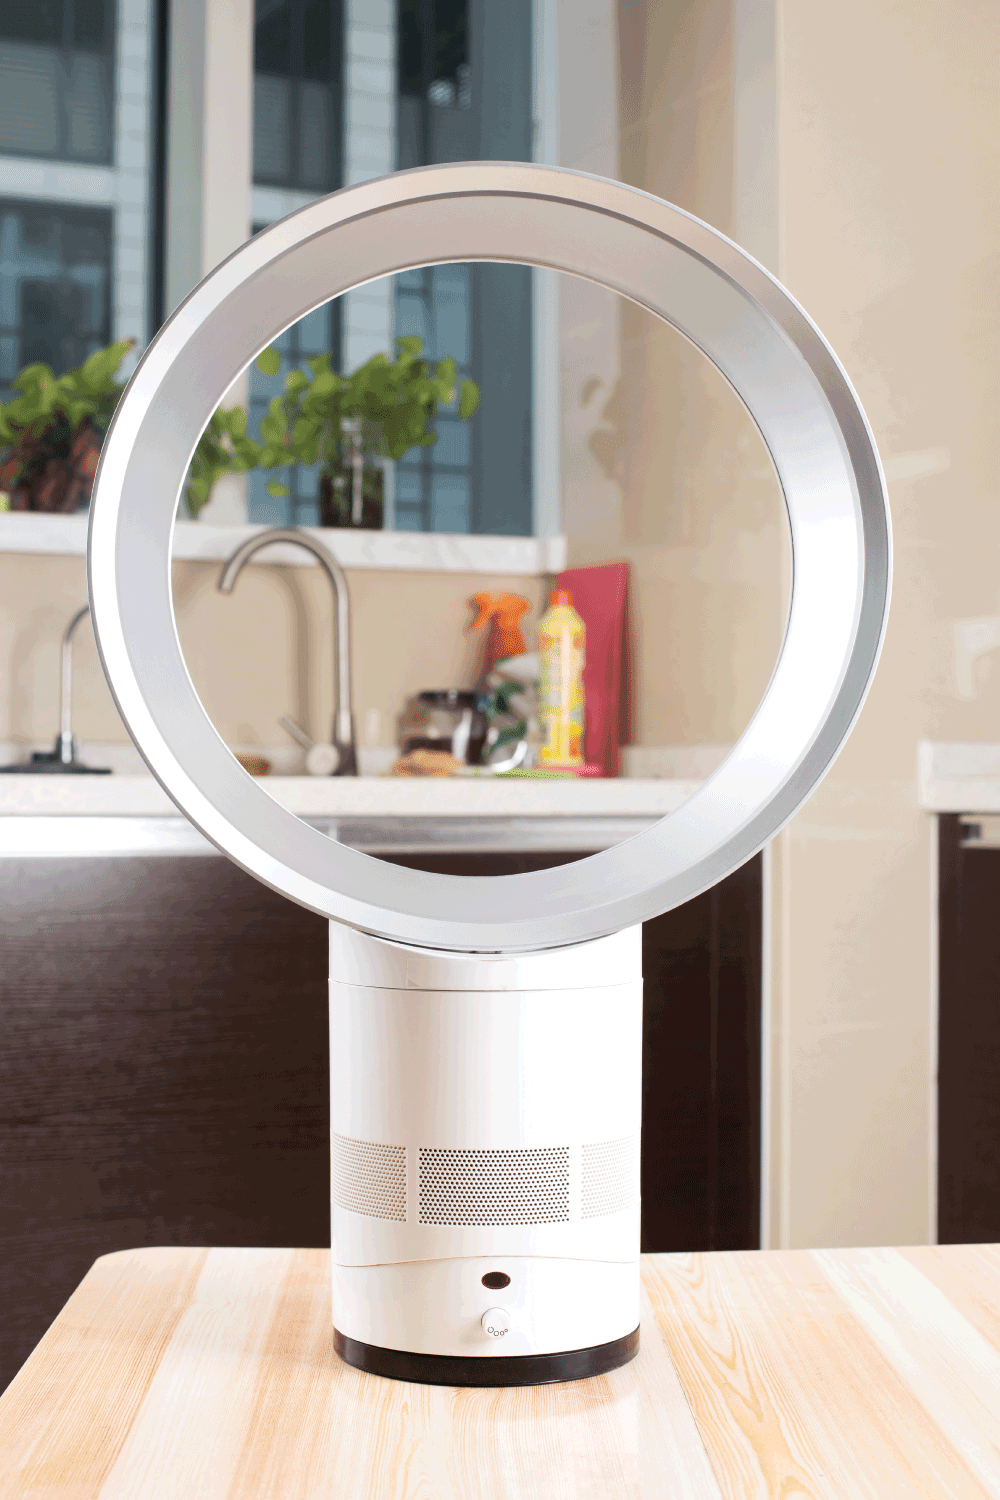 Dyson Air Multiplier. It is a uniquely designed fan with no external blades.